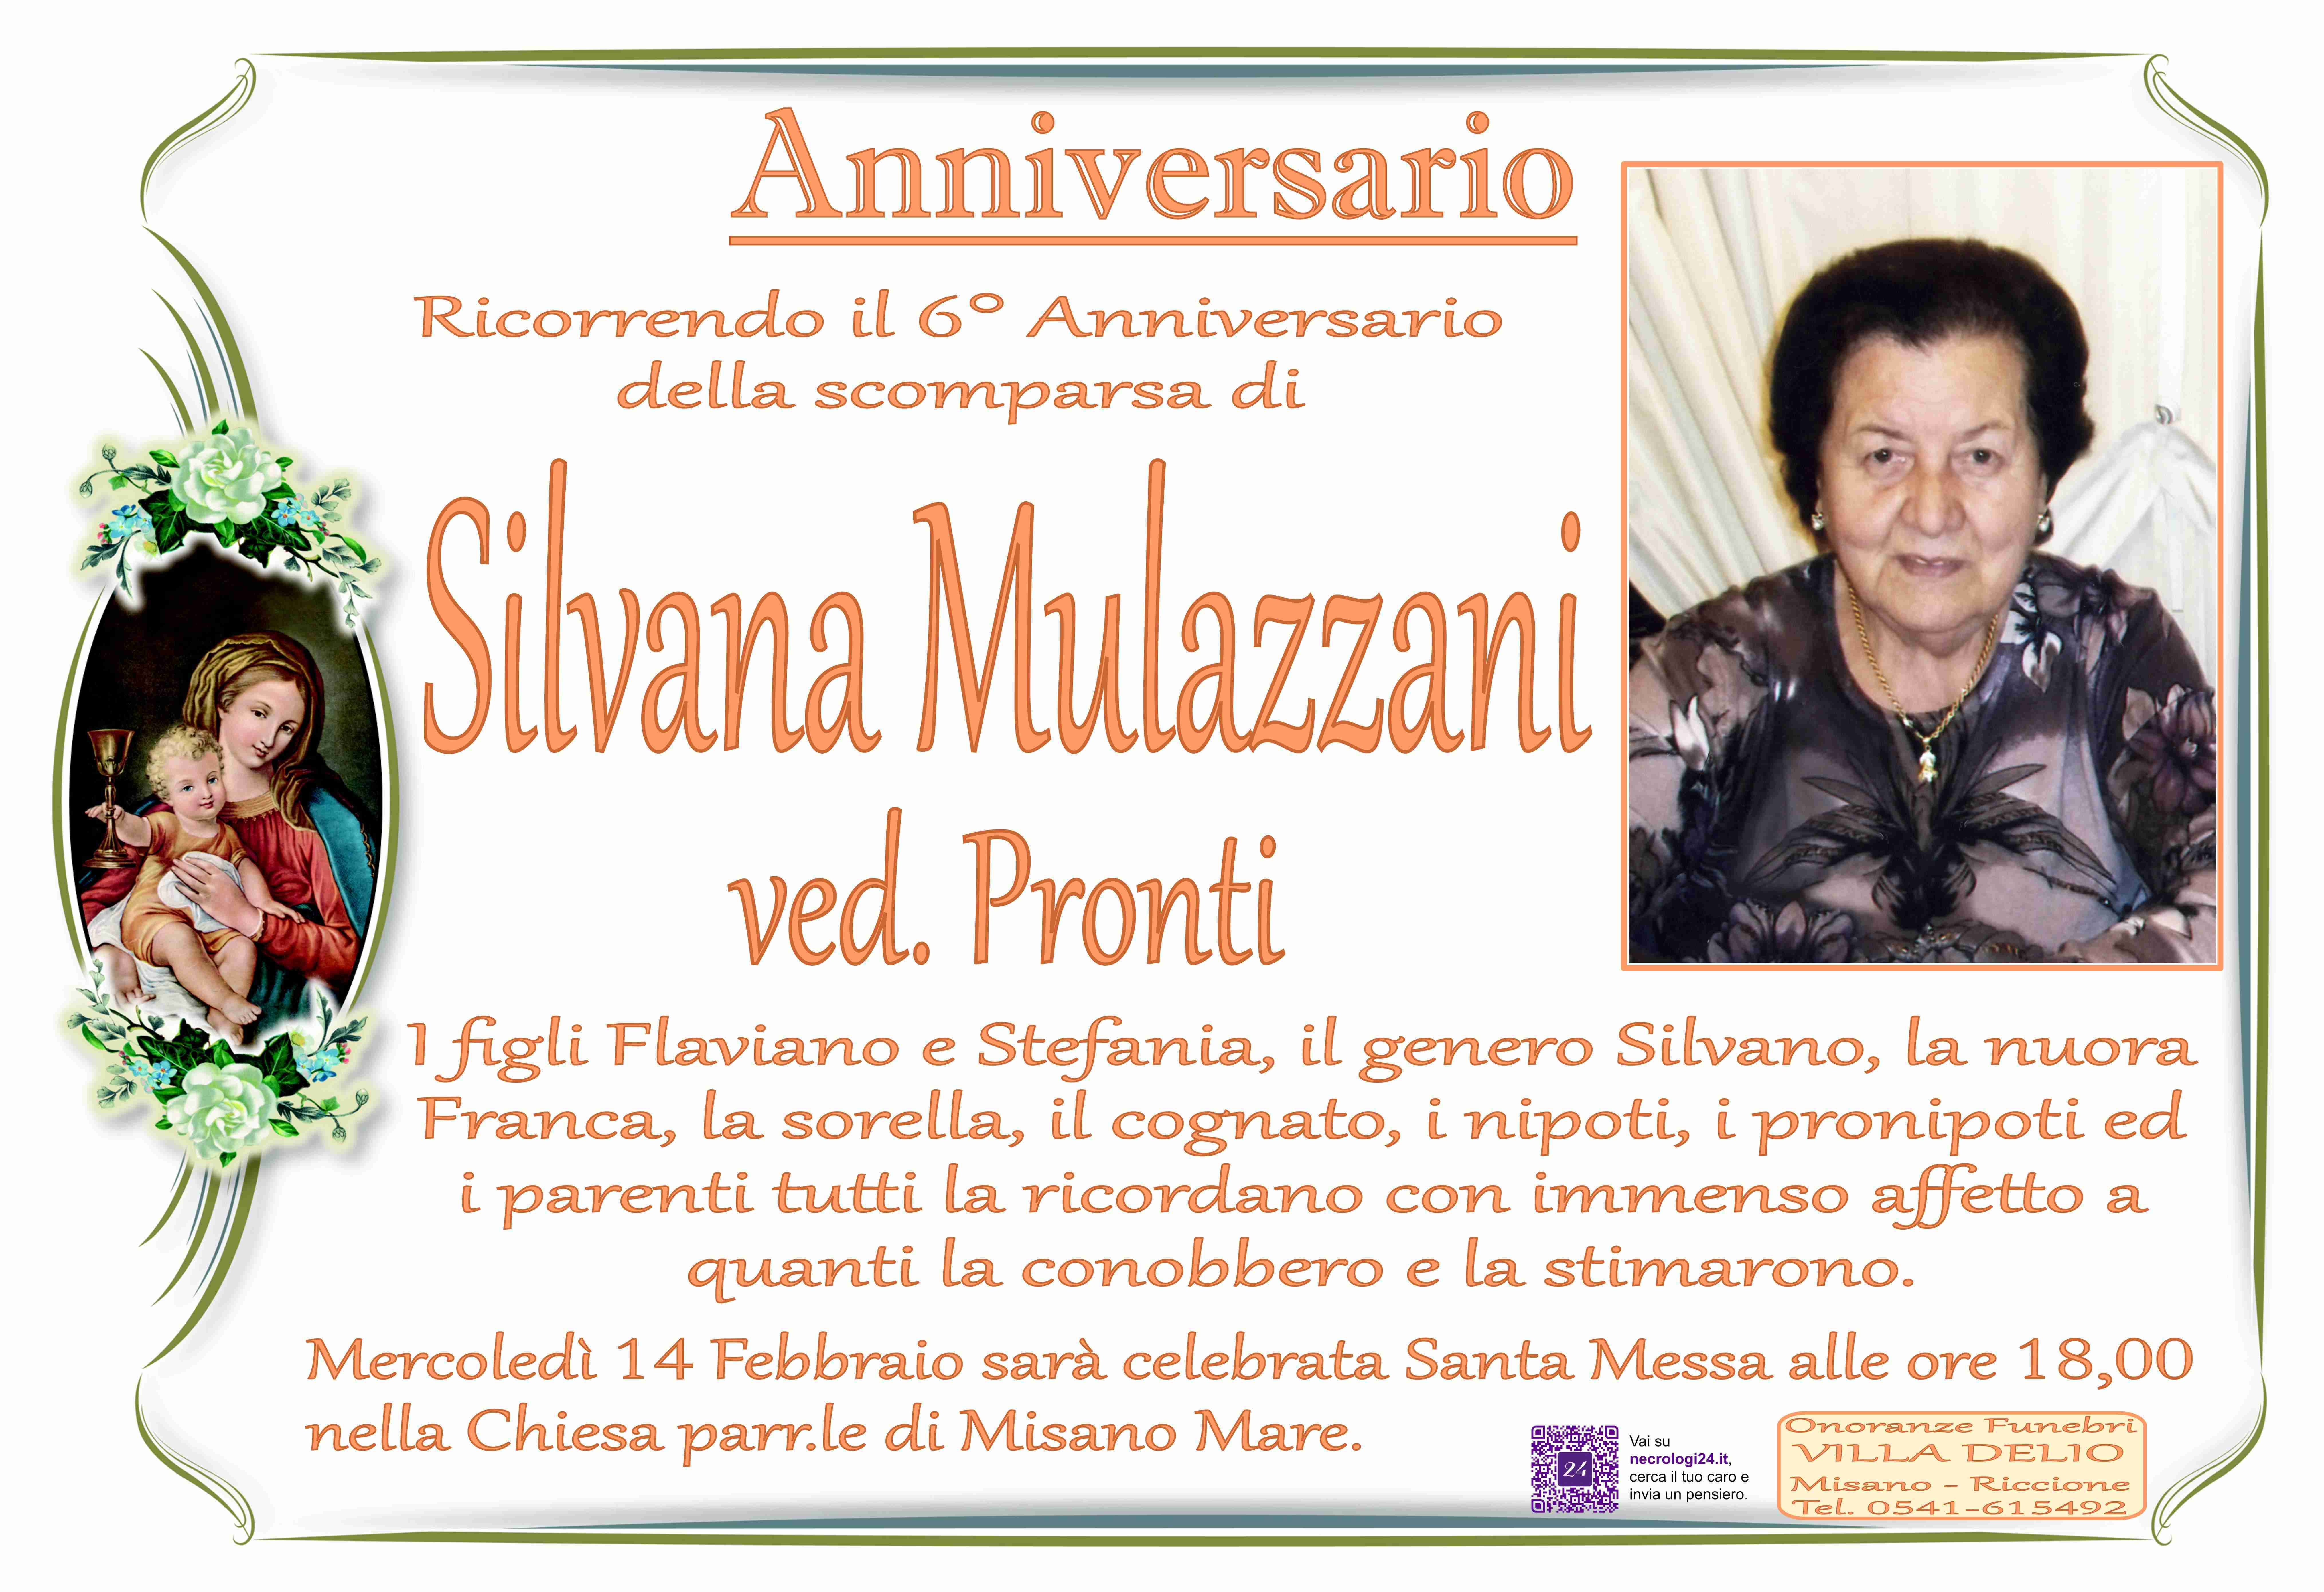 Silvana Mulazzani ved. Pronti